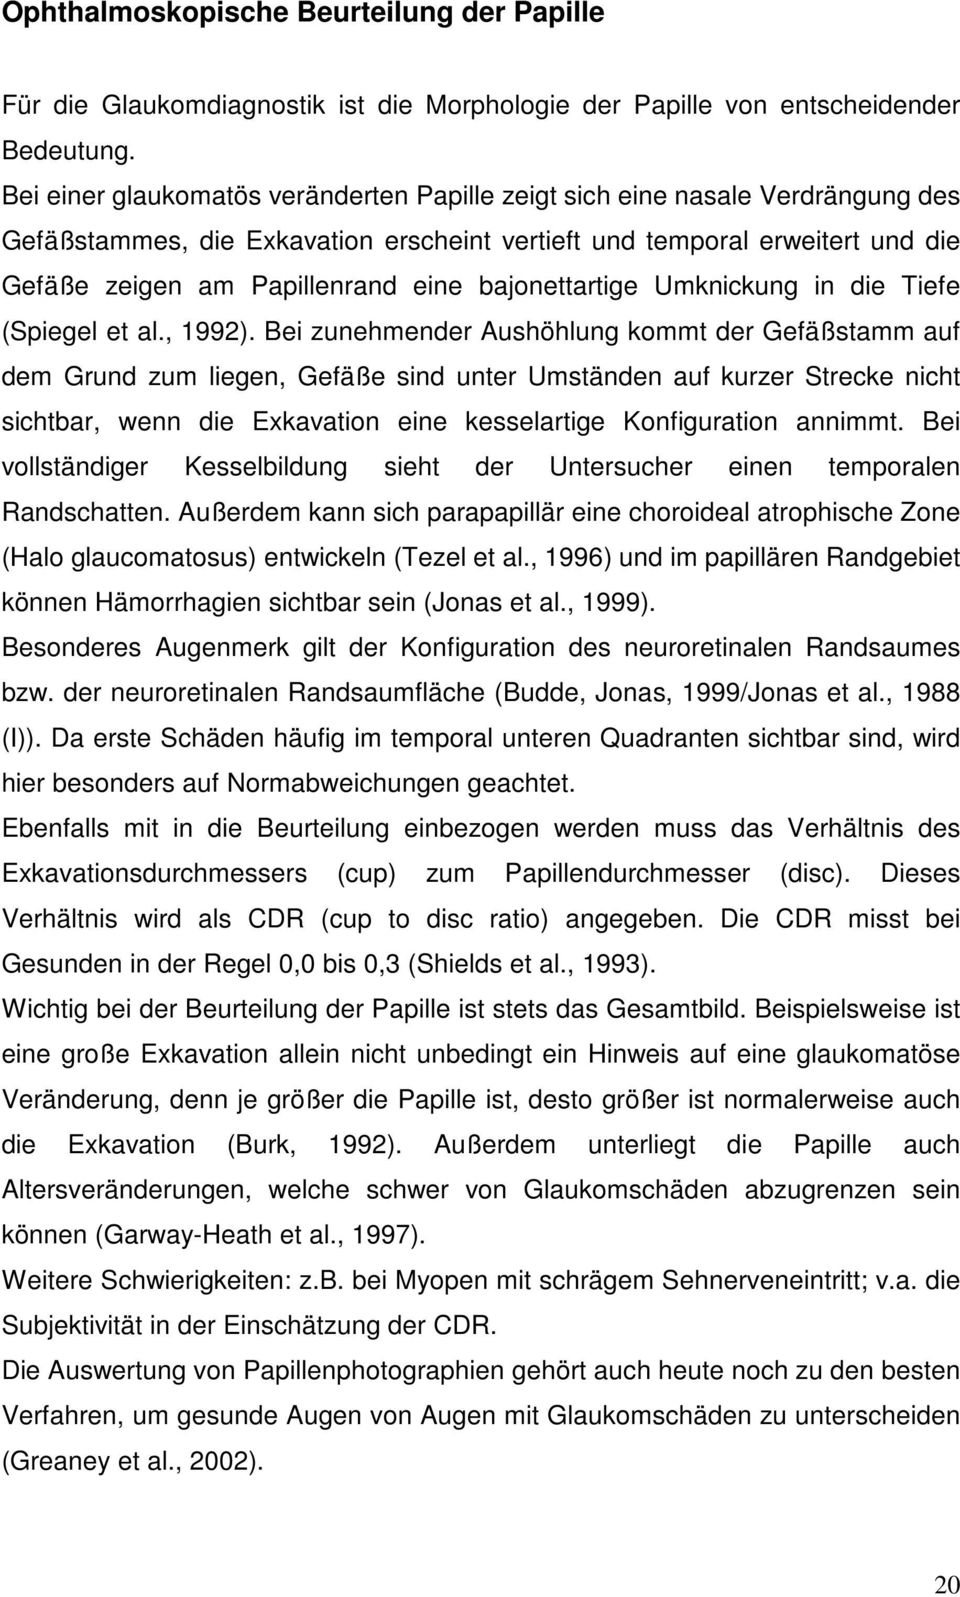 bajonettartige Umknickung in die Tiefe (Spiegel et al., 992).